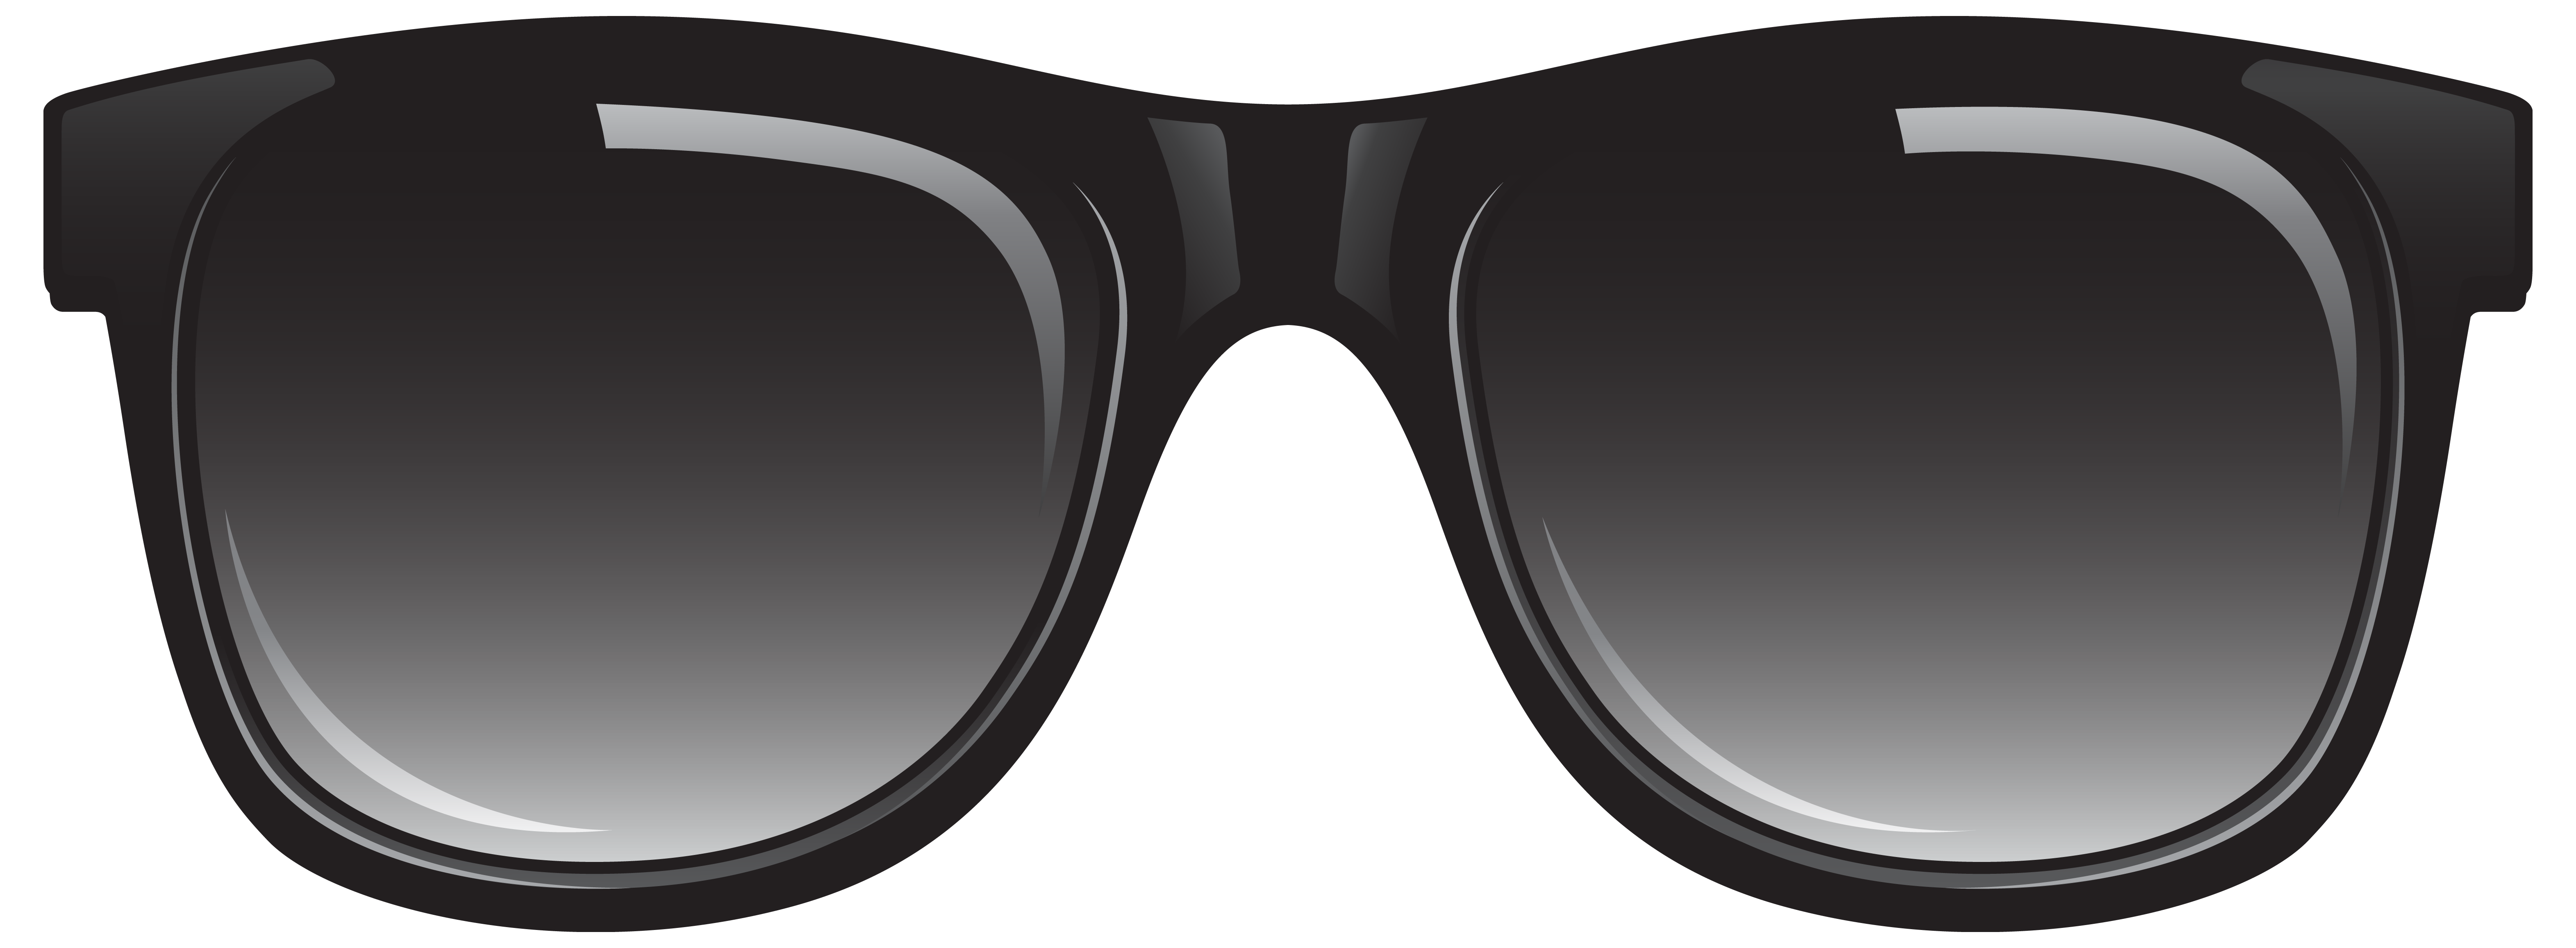 Sunglasses Frames PNG Image